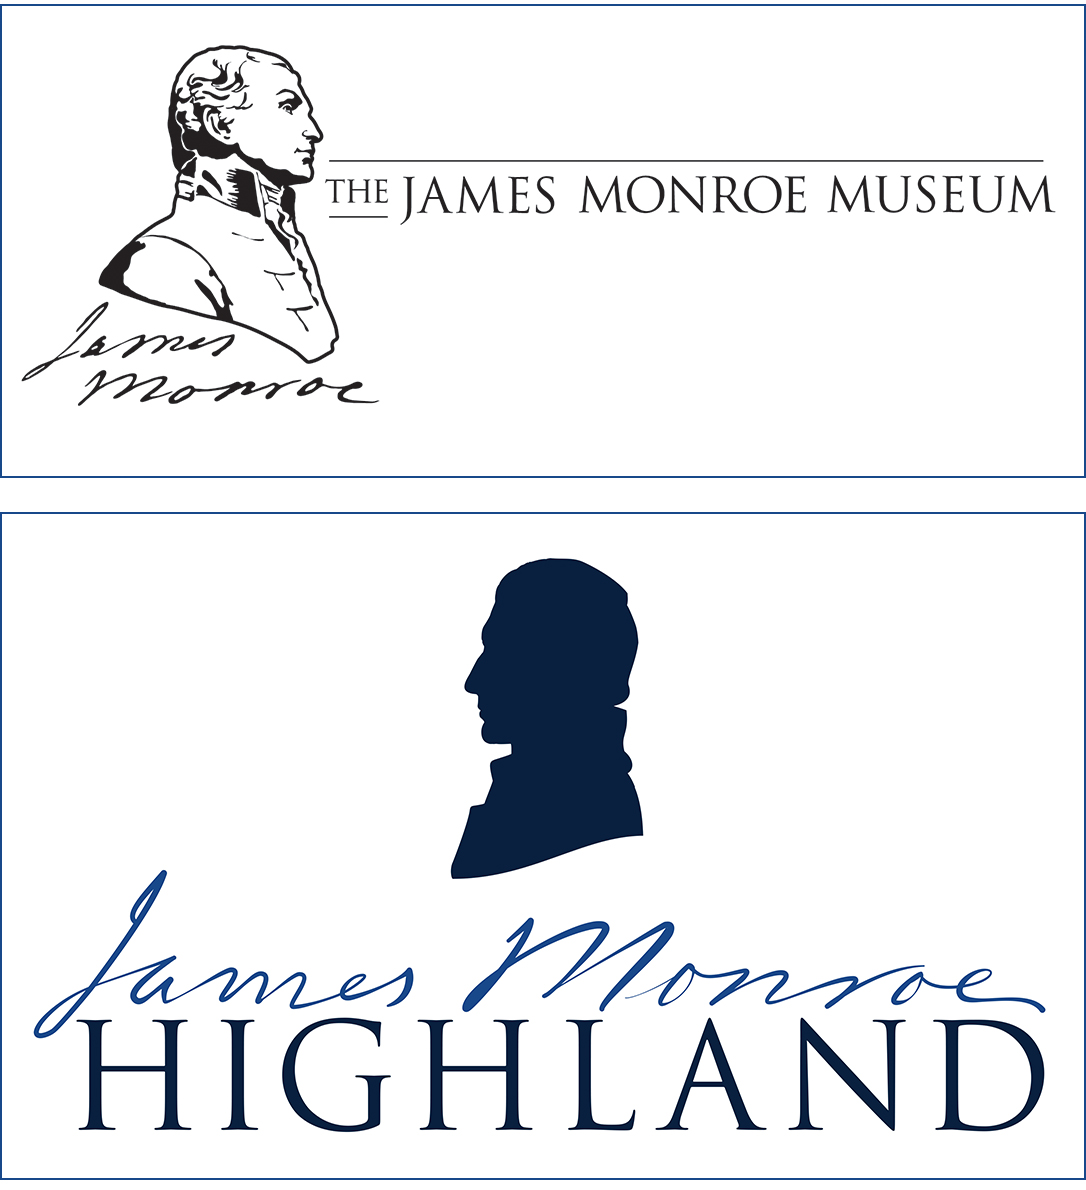 Logos for James Monroe Museum & James Monroe's Highland